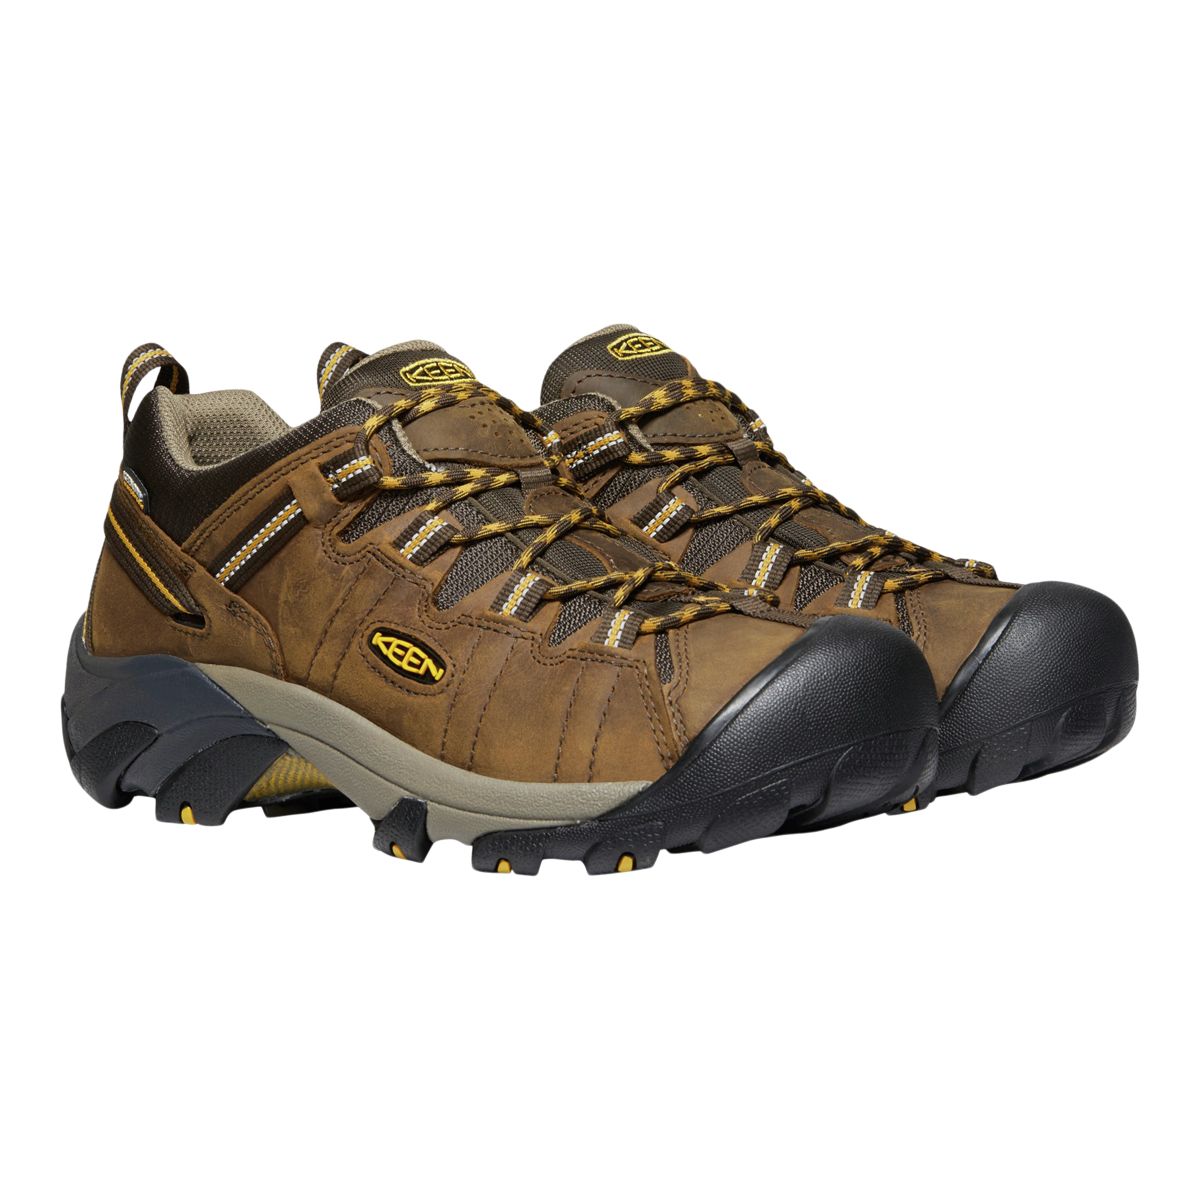 Merrell Men's Moab Adventure 3 Shoes, Waterproof, Leather